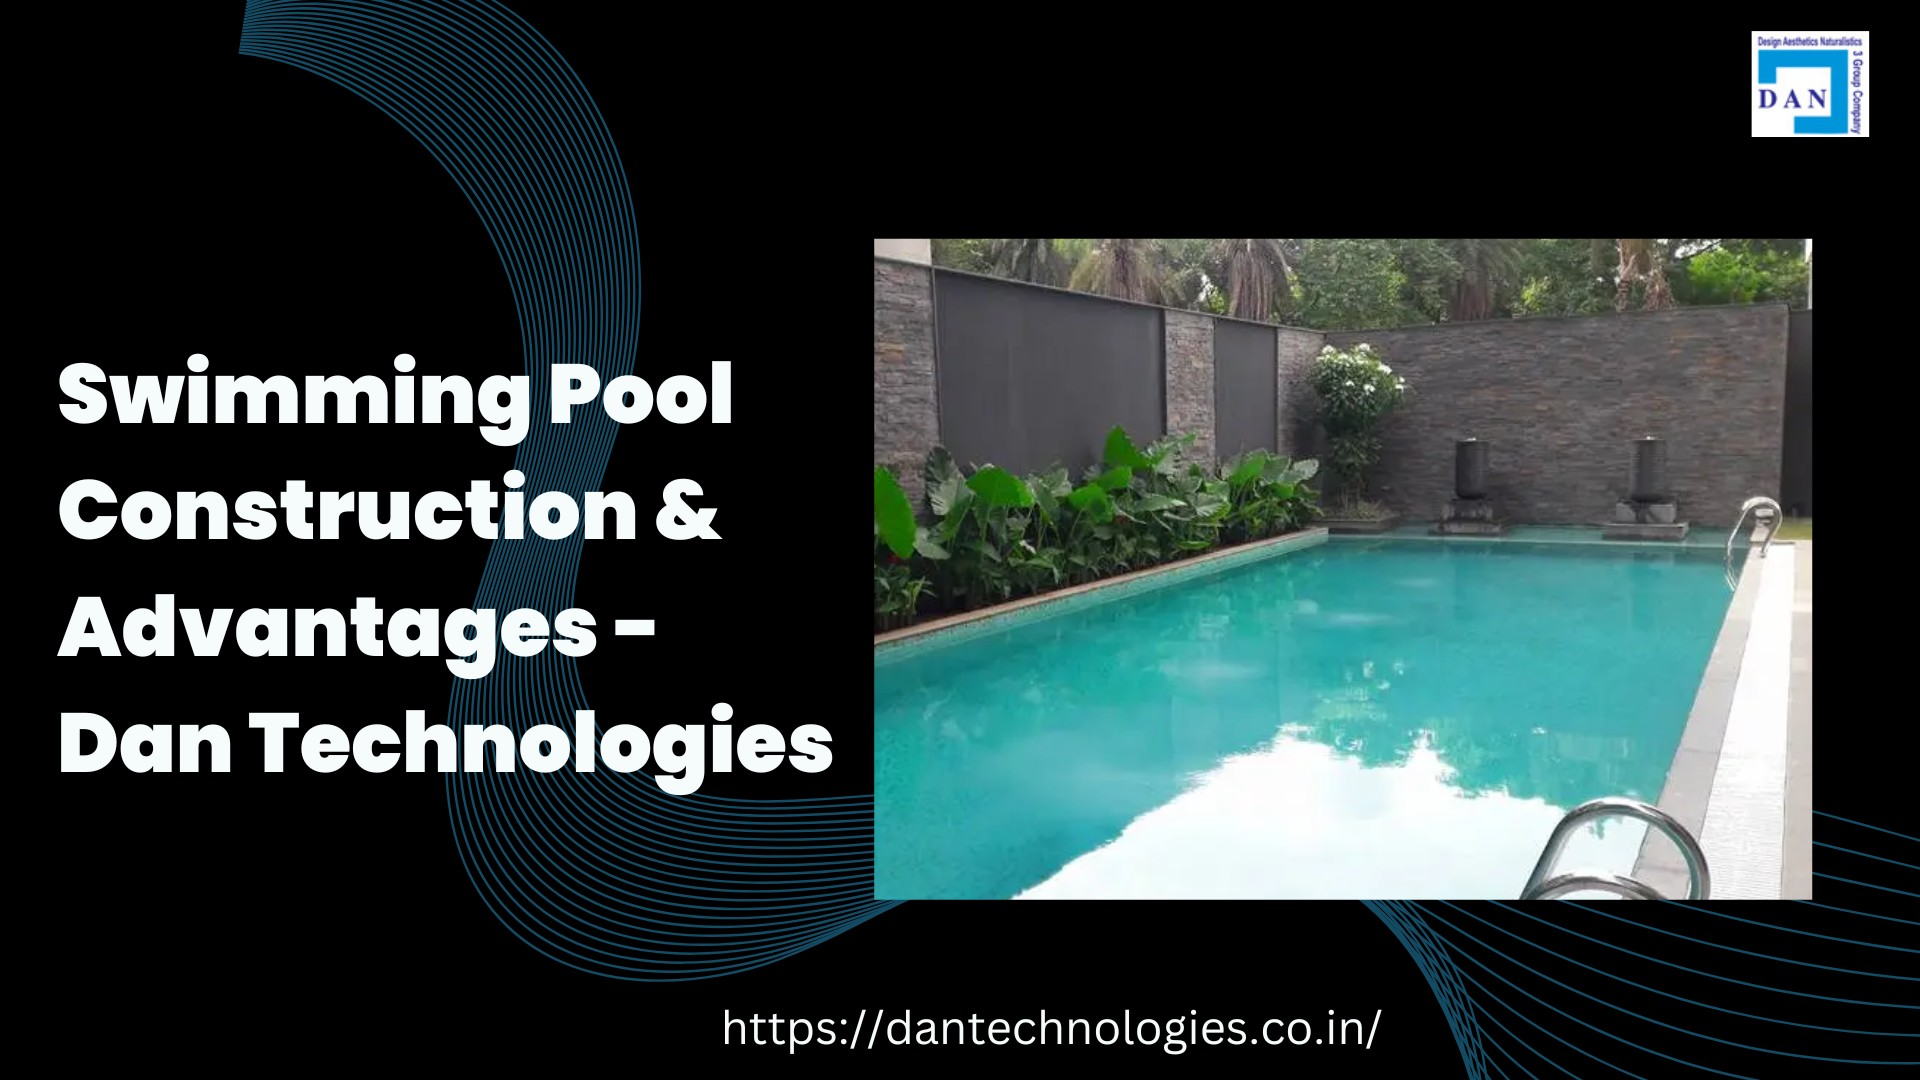 Swimming Pool Construction & Advantages - Dan Technologies